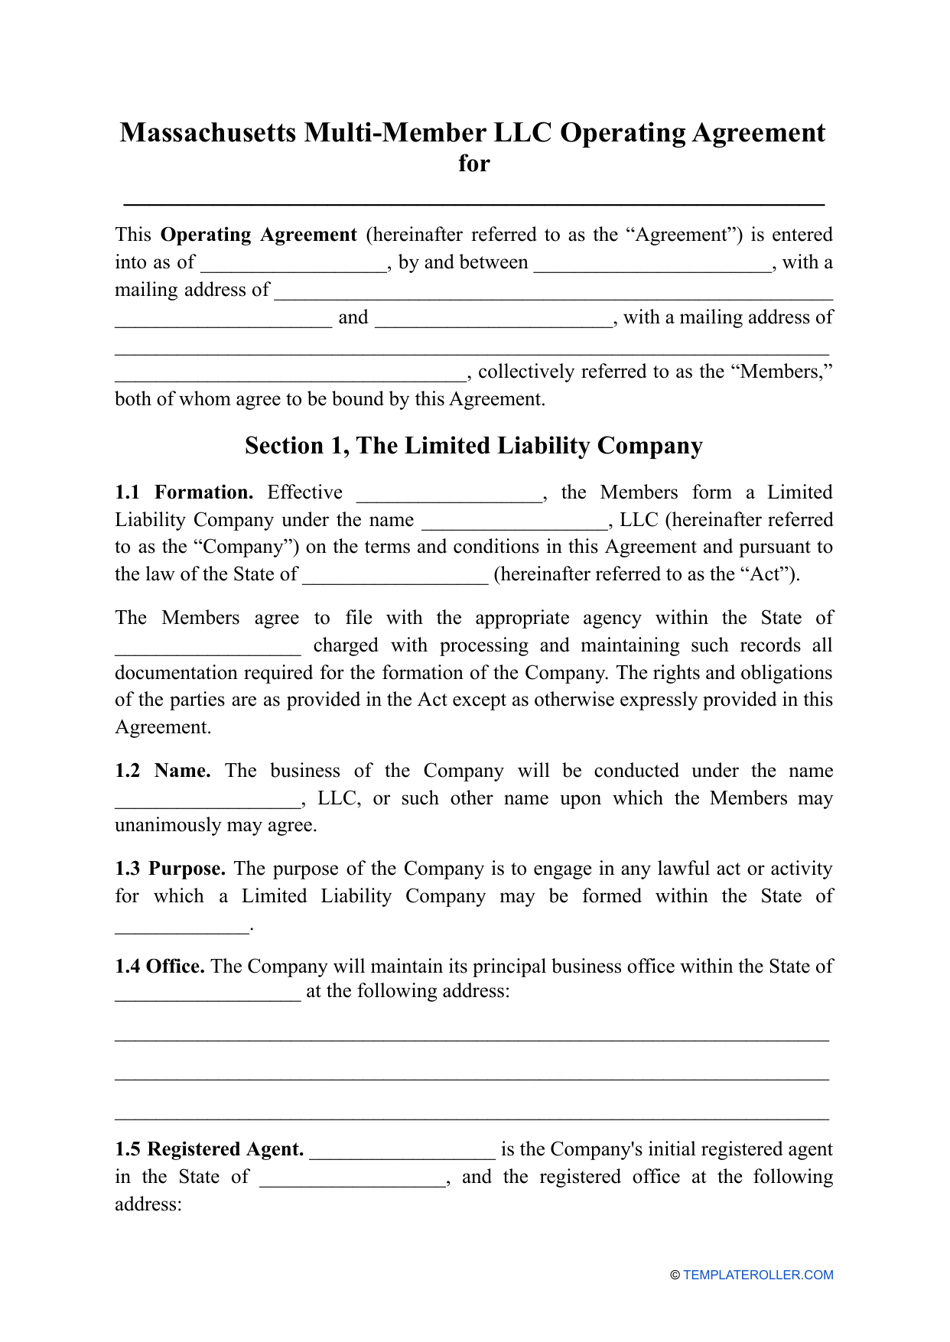 Multi-Member LLC Operating Agreement Template - Massachusetts, Page 1